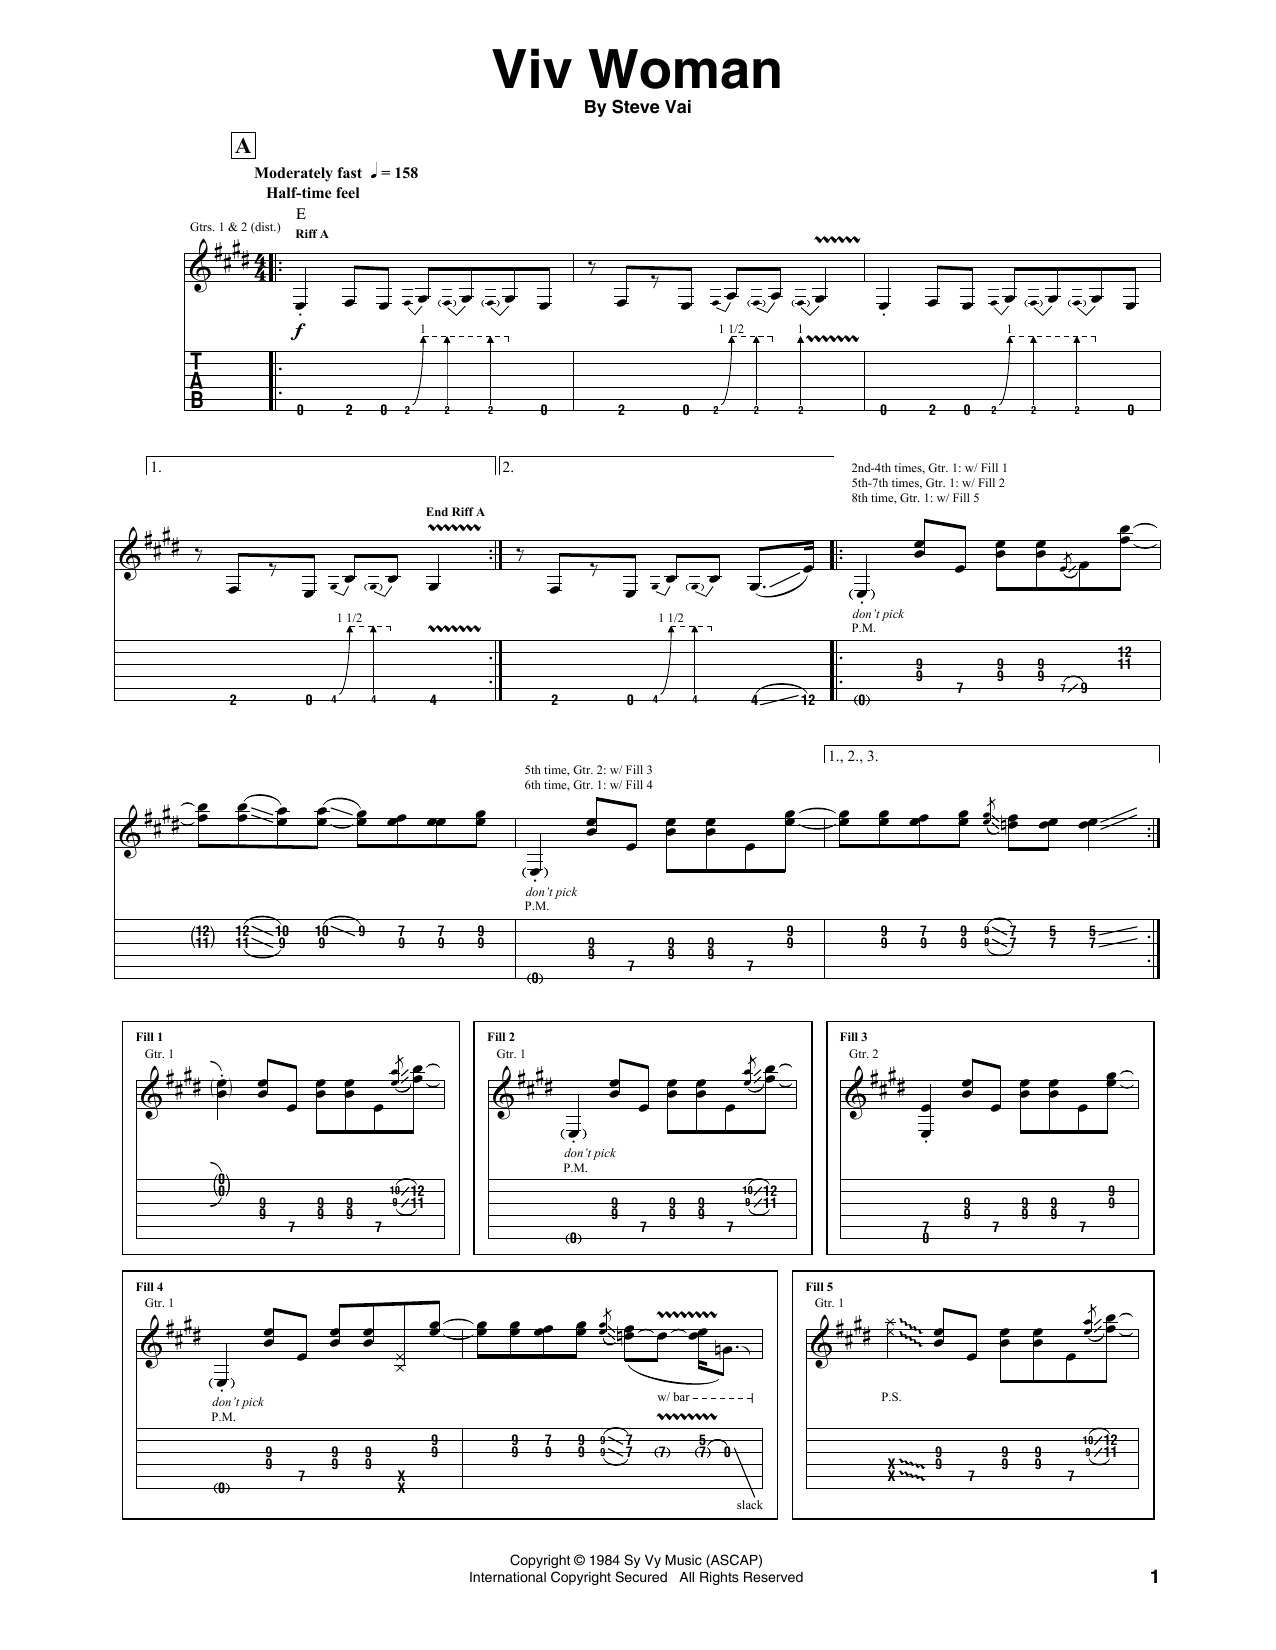 Steve Vai Viv Woman Sheet Music Notes & Chords for Guitar Tab - Download or Print PDF